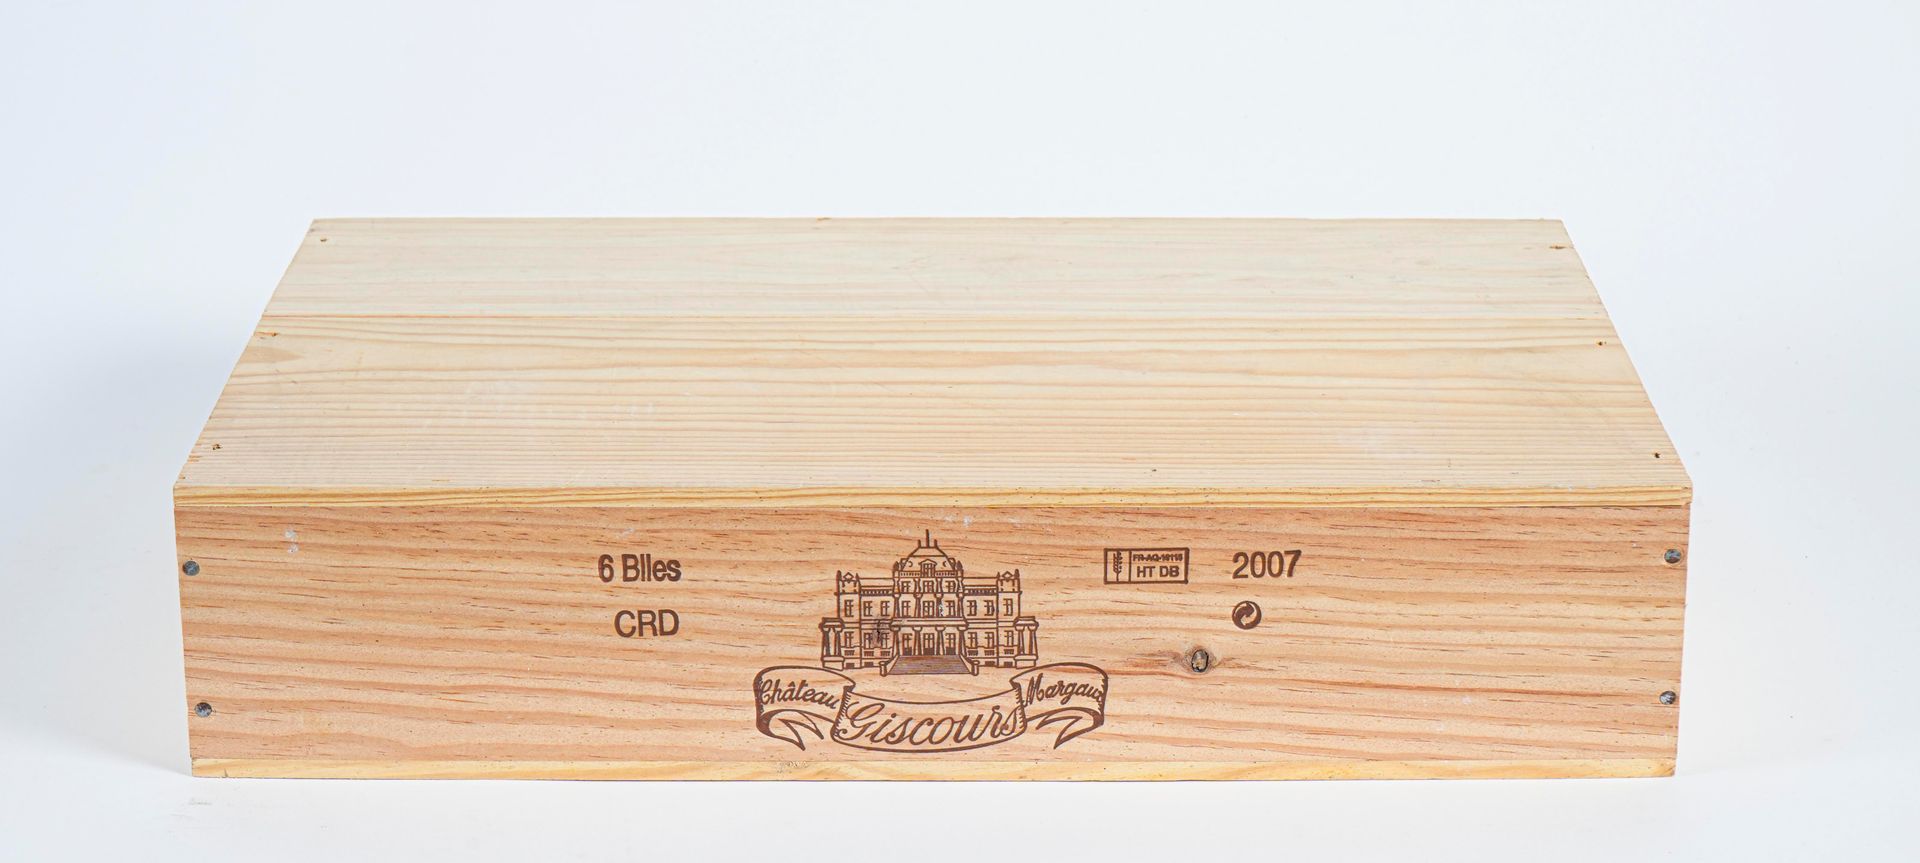 Null 6 B CHÂTEAU GISCOURS (Caja de madera original) GCC3 Margaux 2007